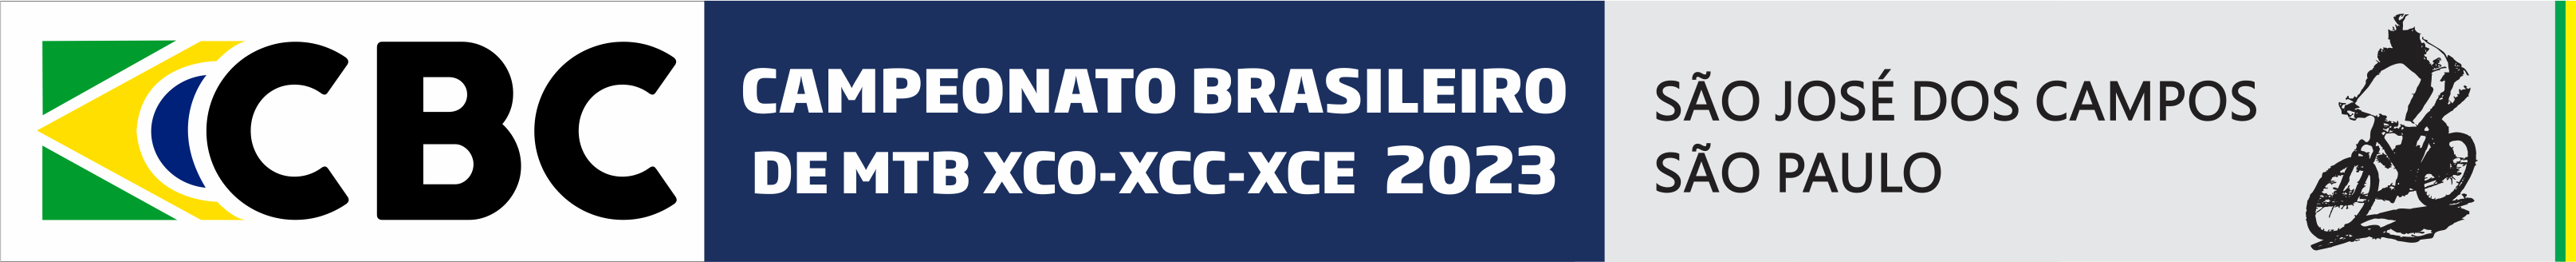 Brasileiro de XCO: chegamos ou passamos do limite nas pistas? - USE IQ